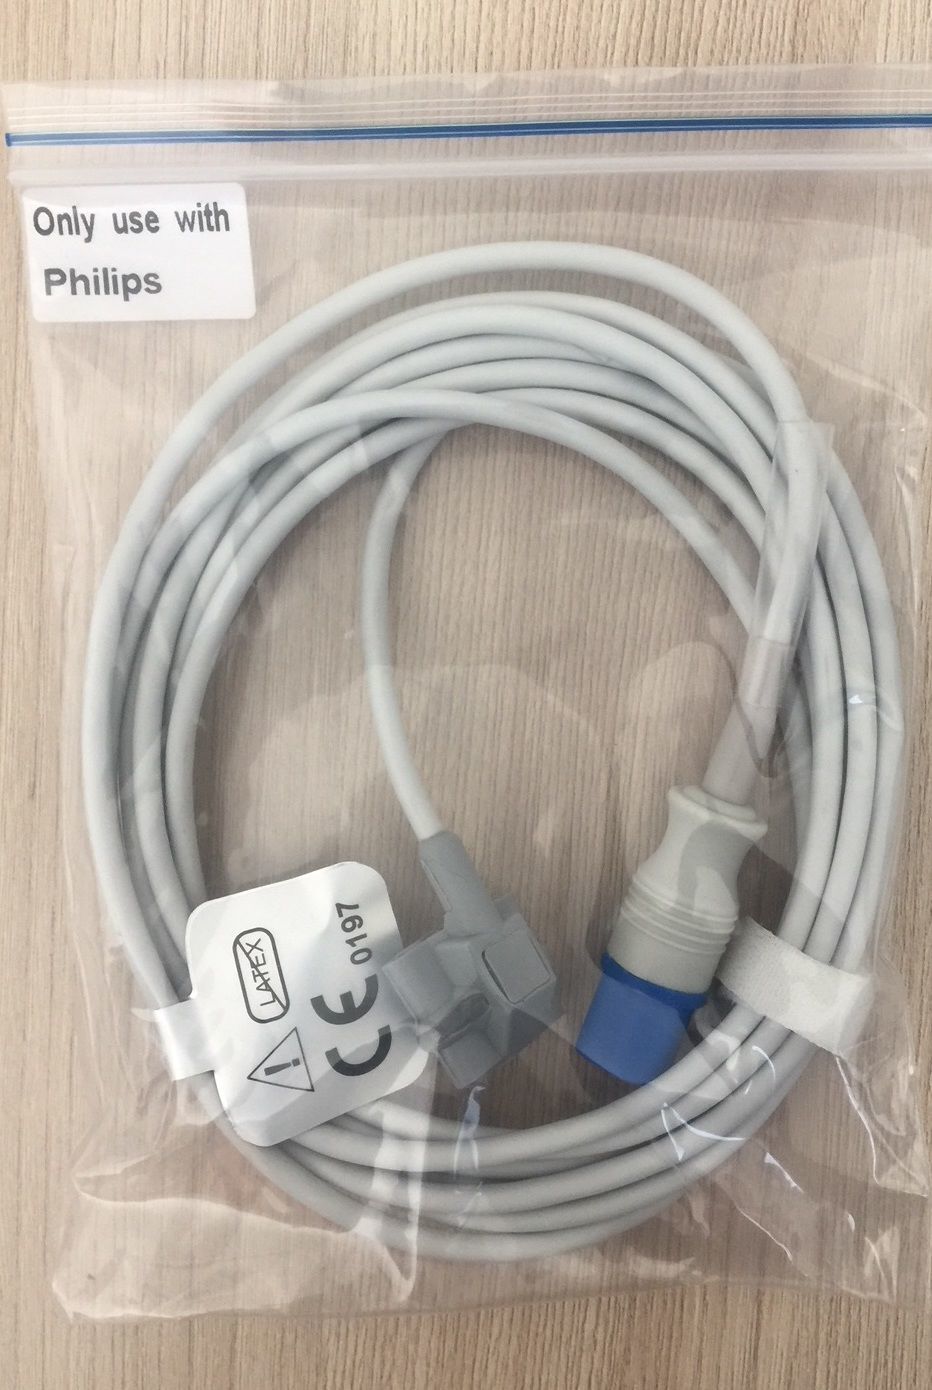 Spo2 Infant probe for Patient Monitor HP Philips_สายแซทเด็กเล็กสำหรับมอนิเตอร์ฟิลิปส์